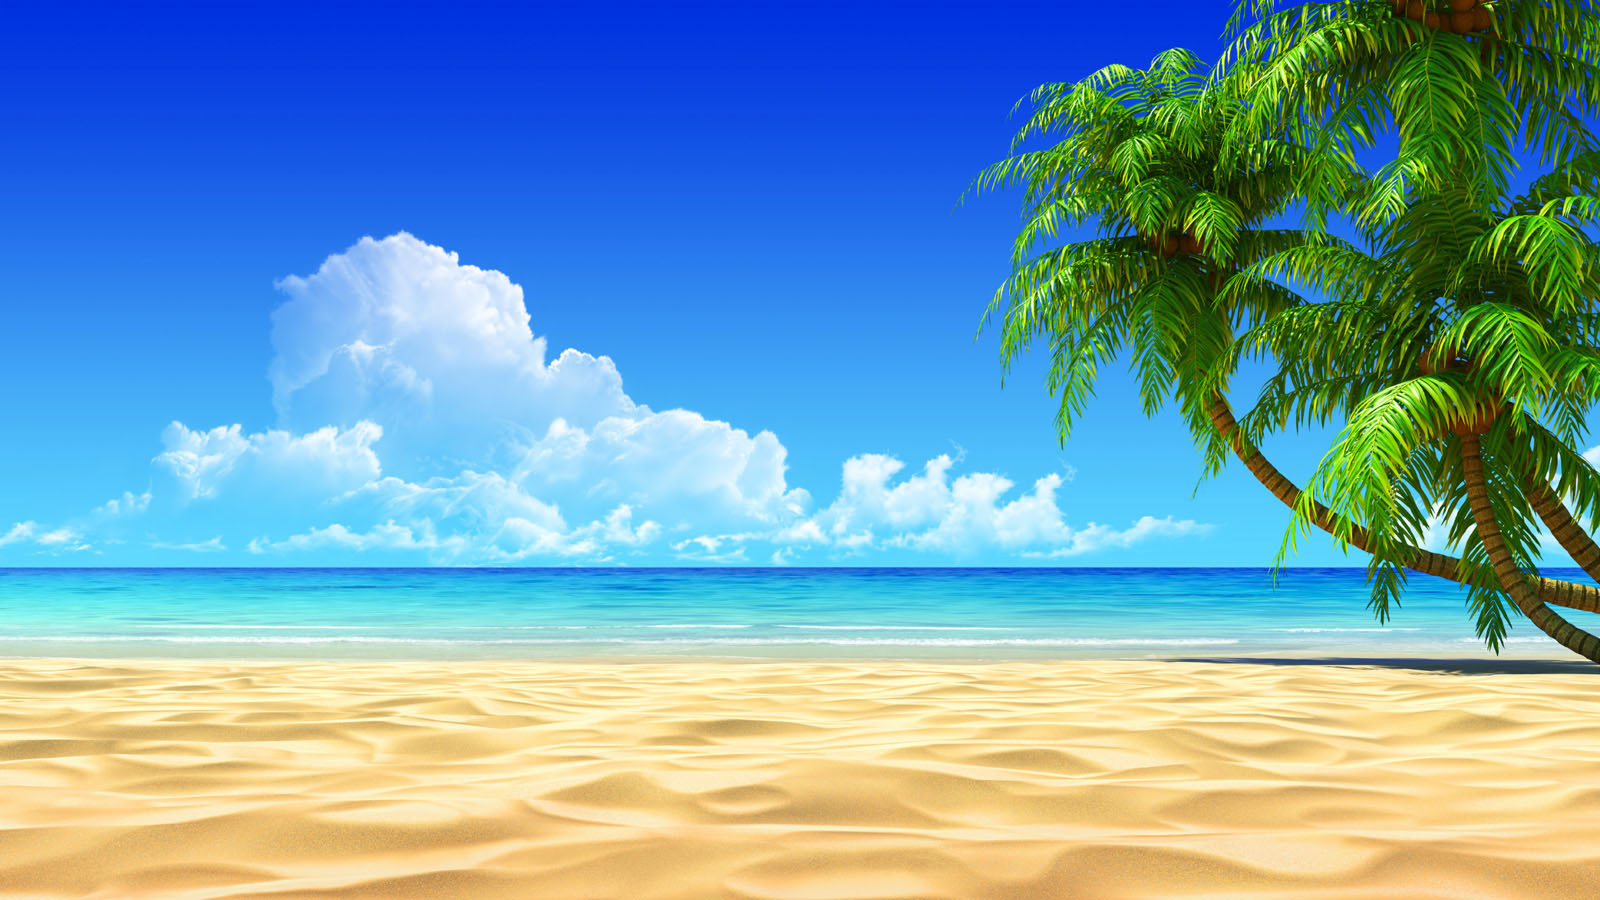 Beach Wallpaper For Mobile And Desktop In Full HD